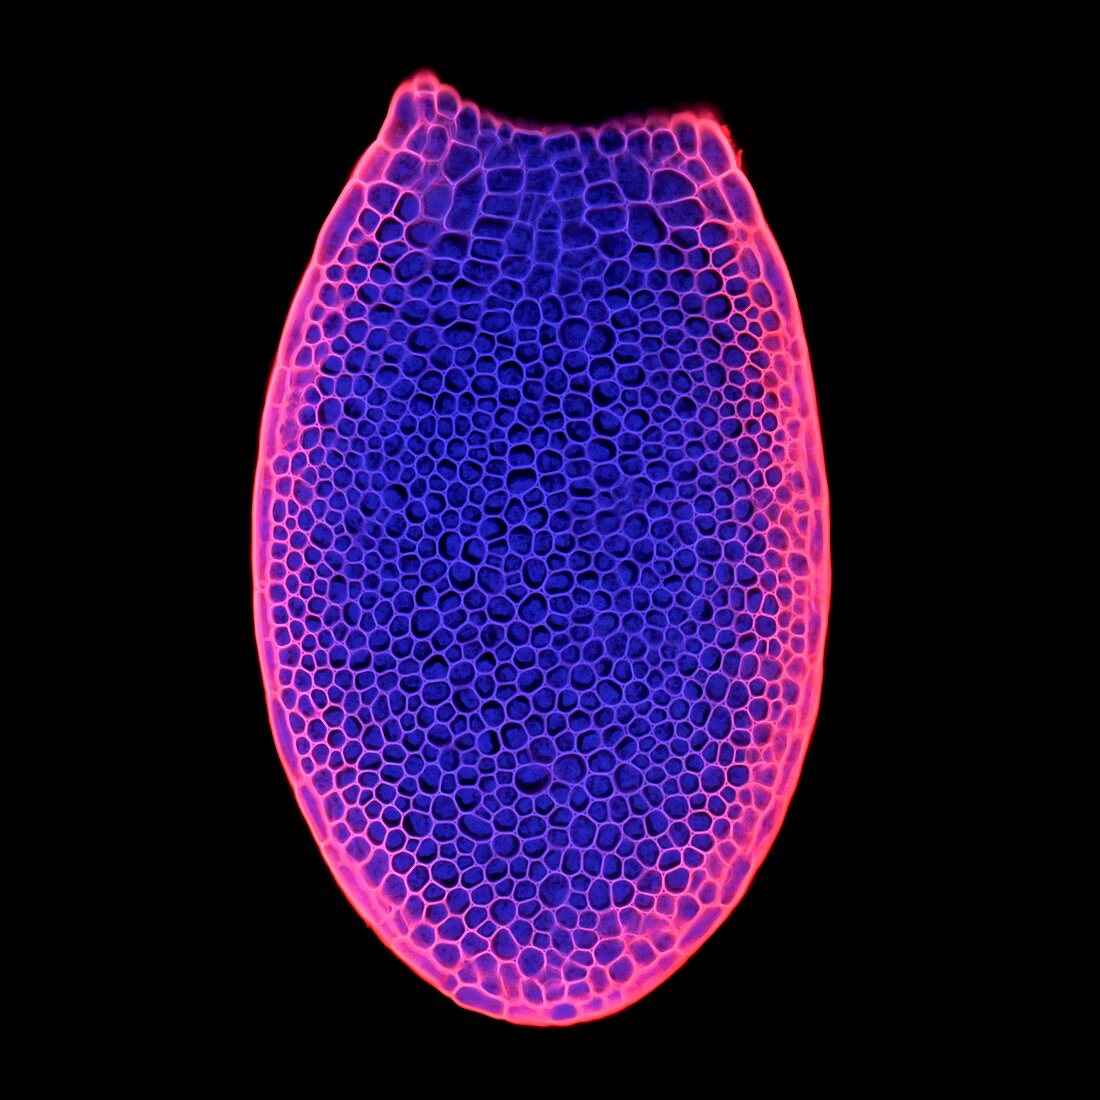 Arabidopsis thaliana embryo,micrograph